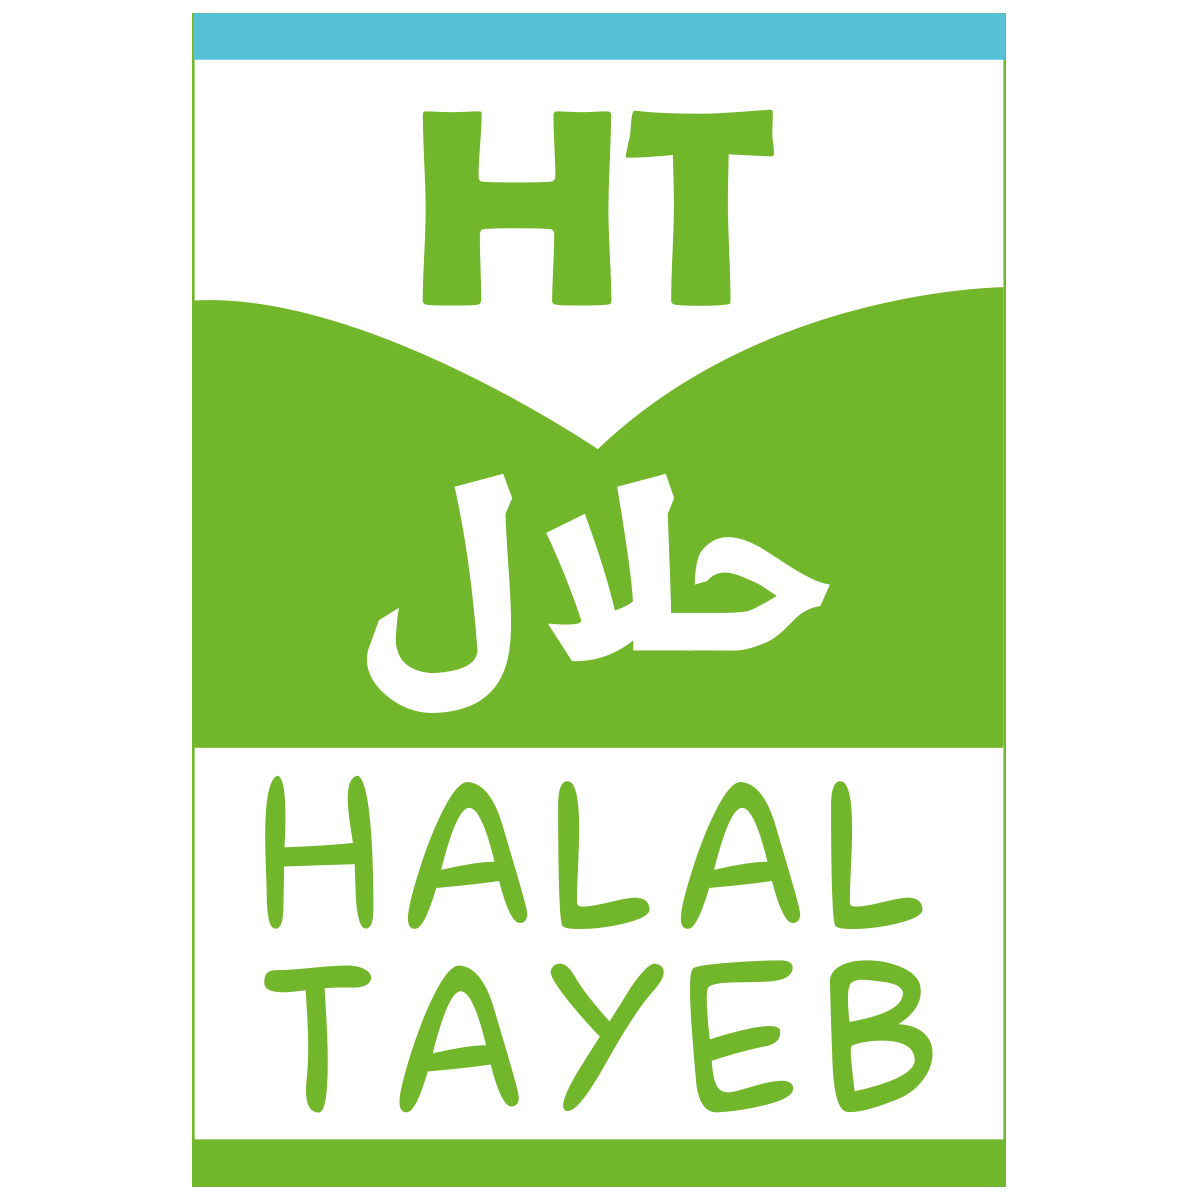 Labels : Halal